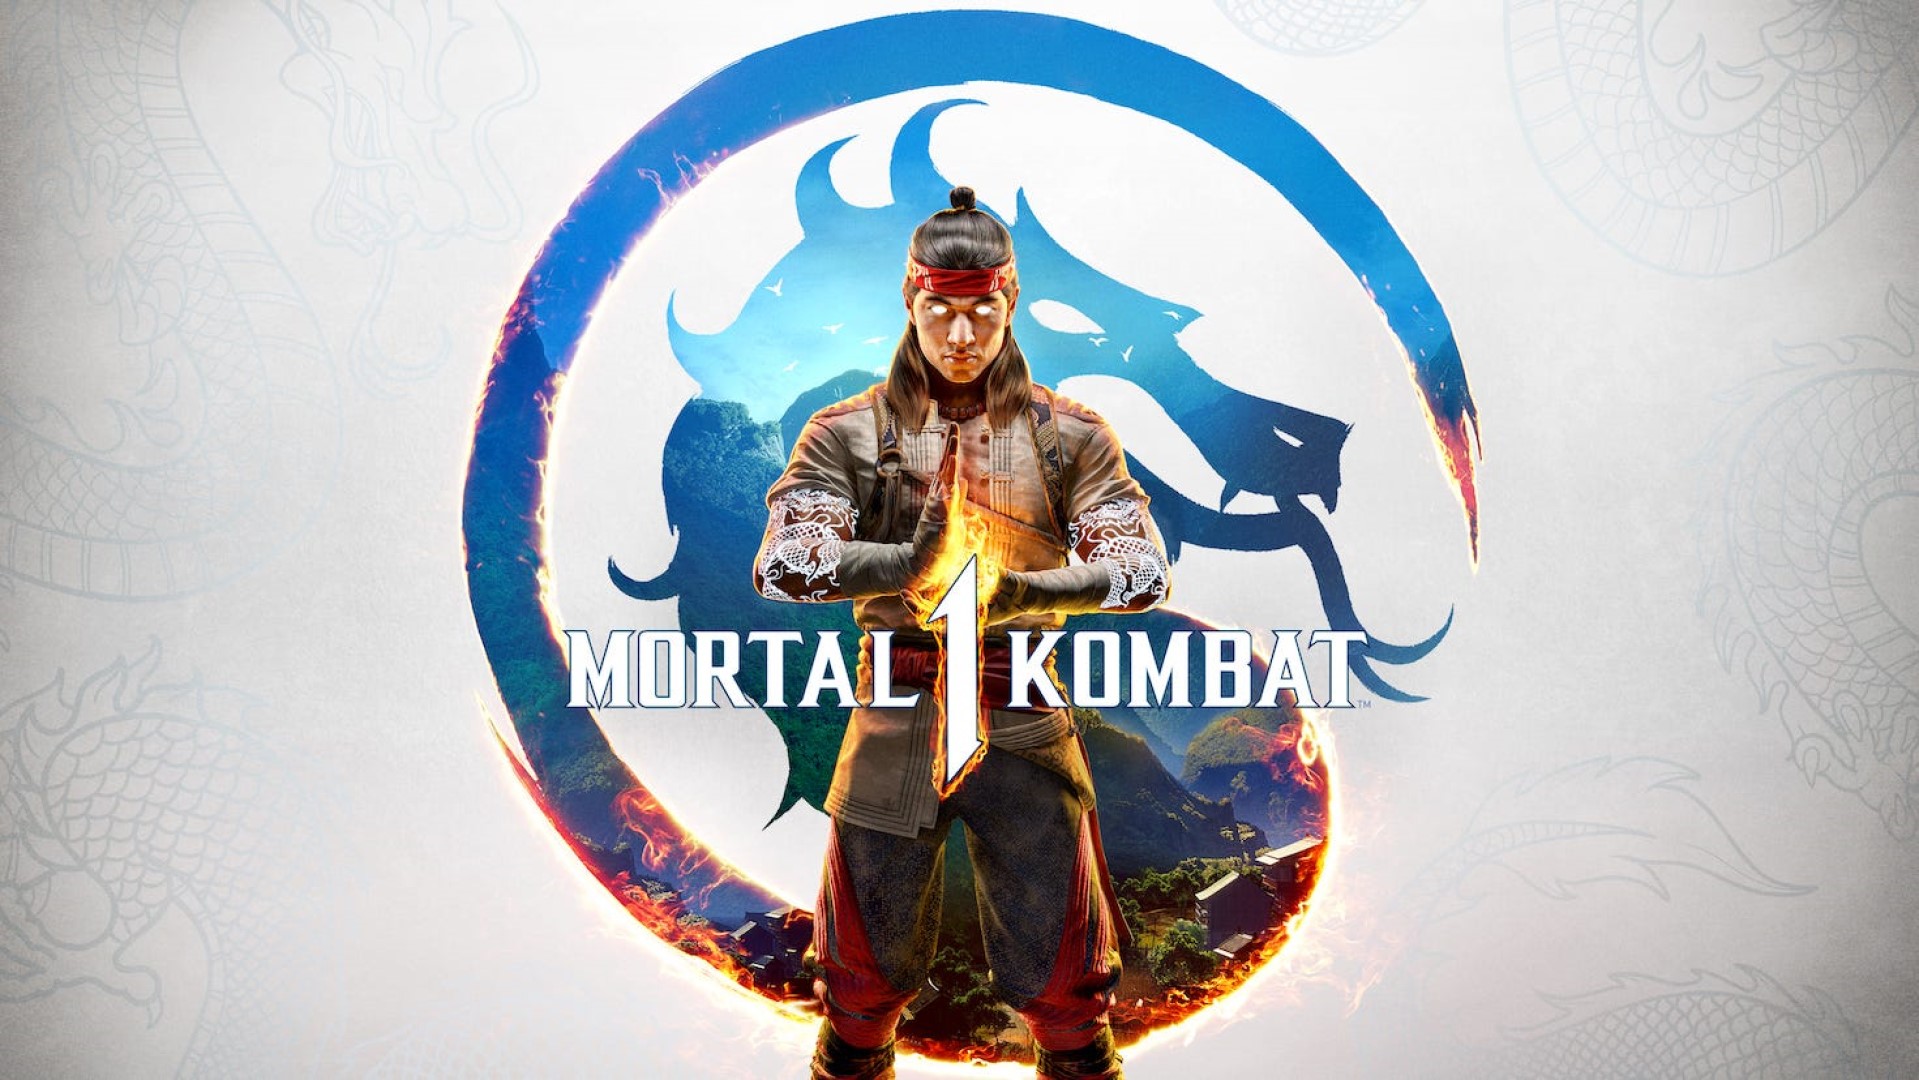 Mortal Kombat 1 – Leaked Trailer and Images Showcase Reiko and Motaro